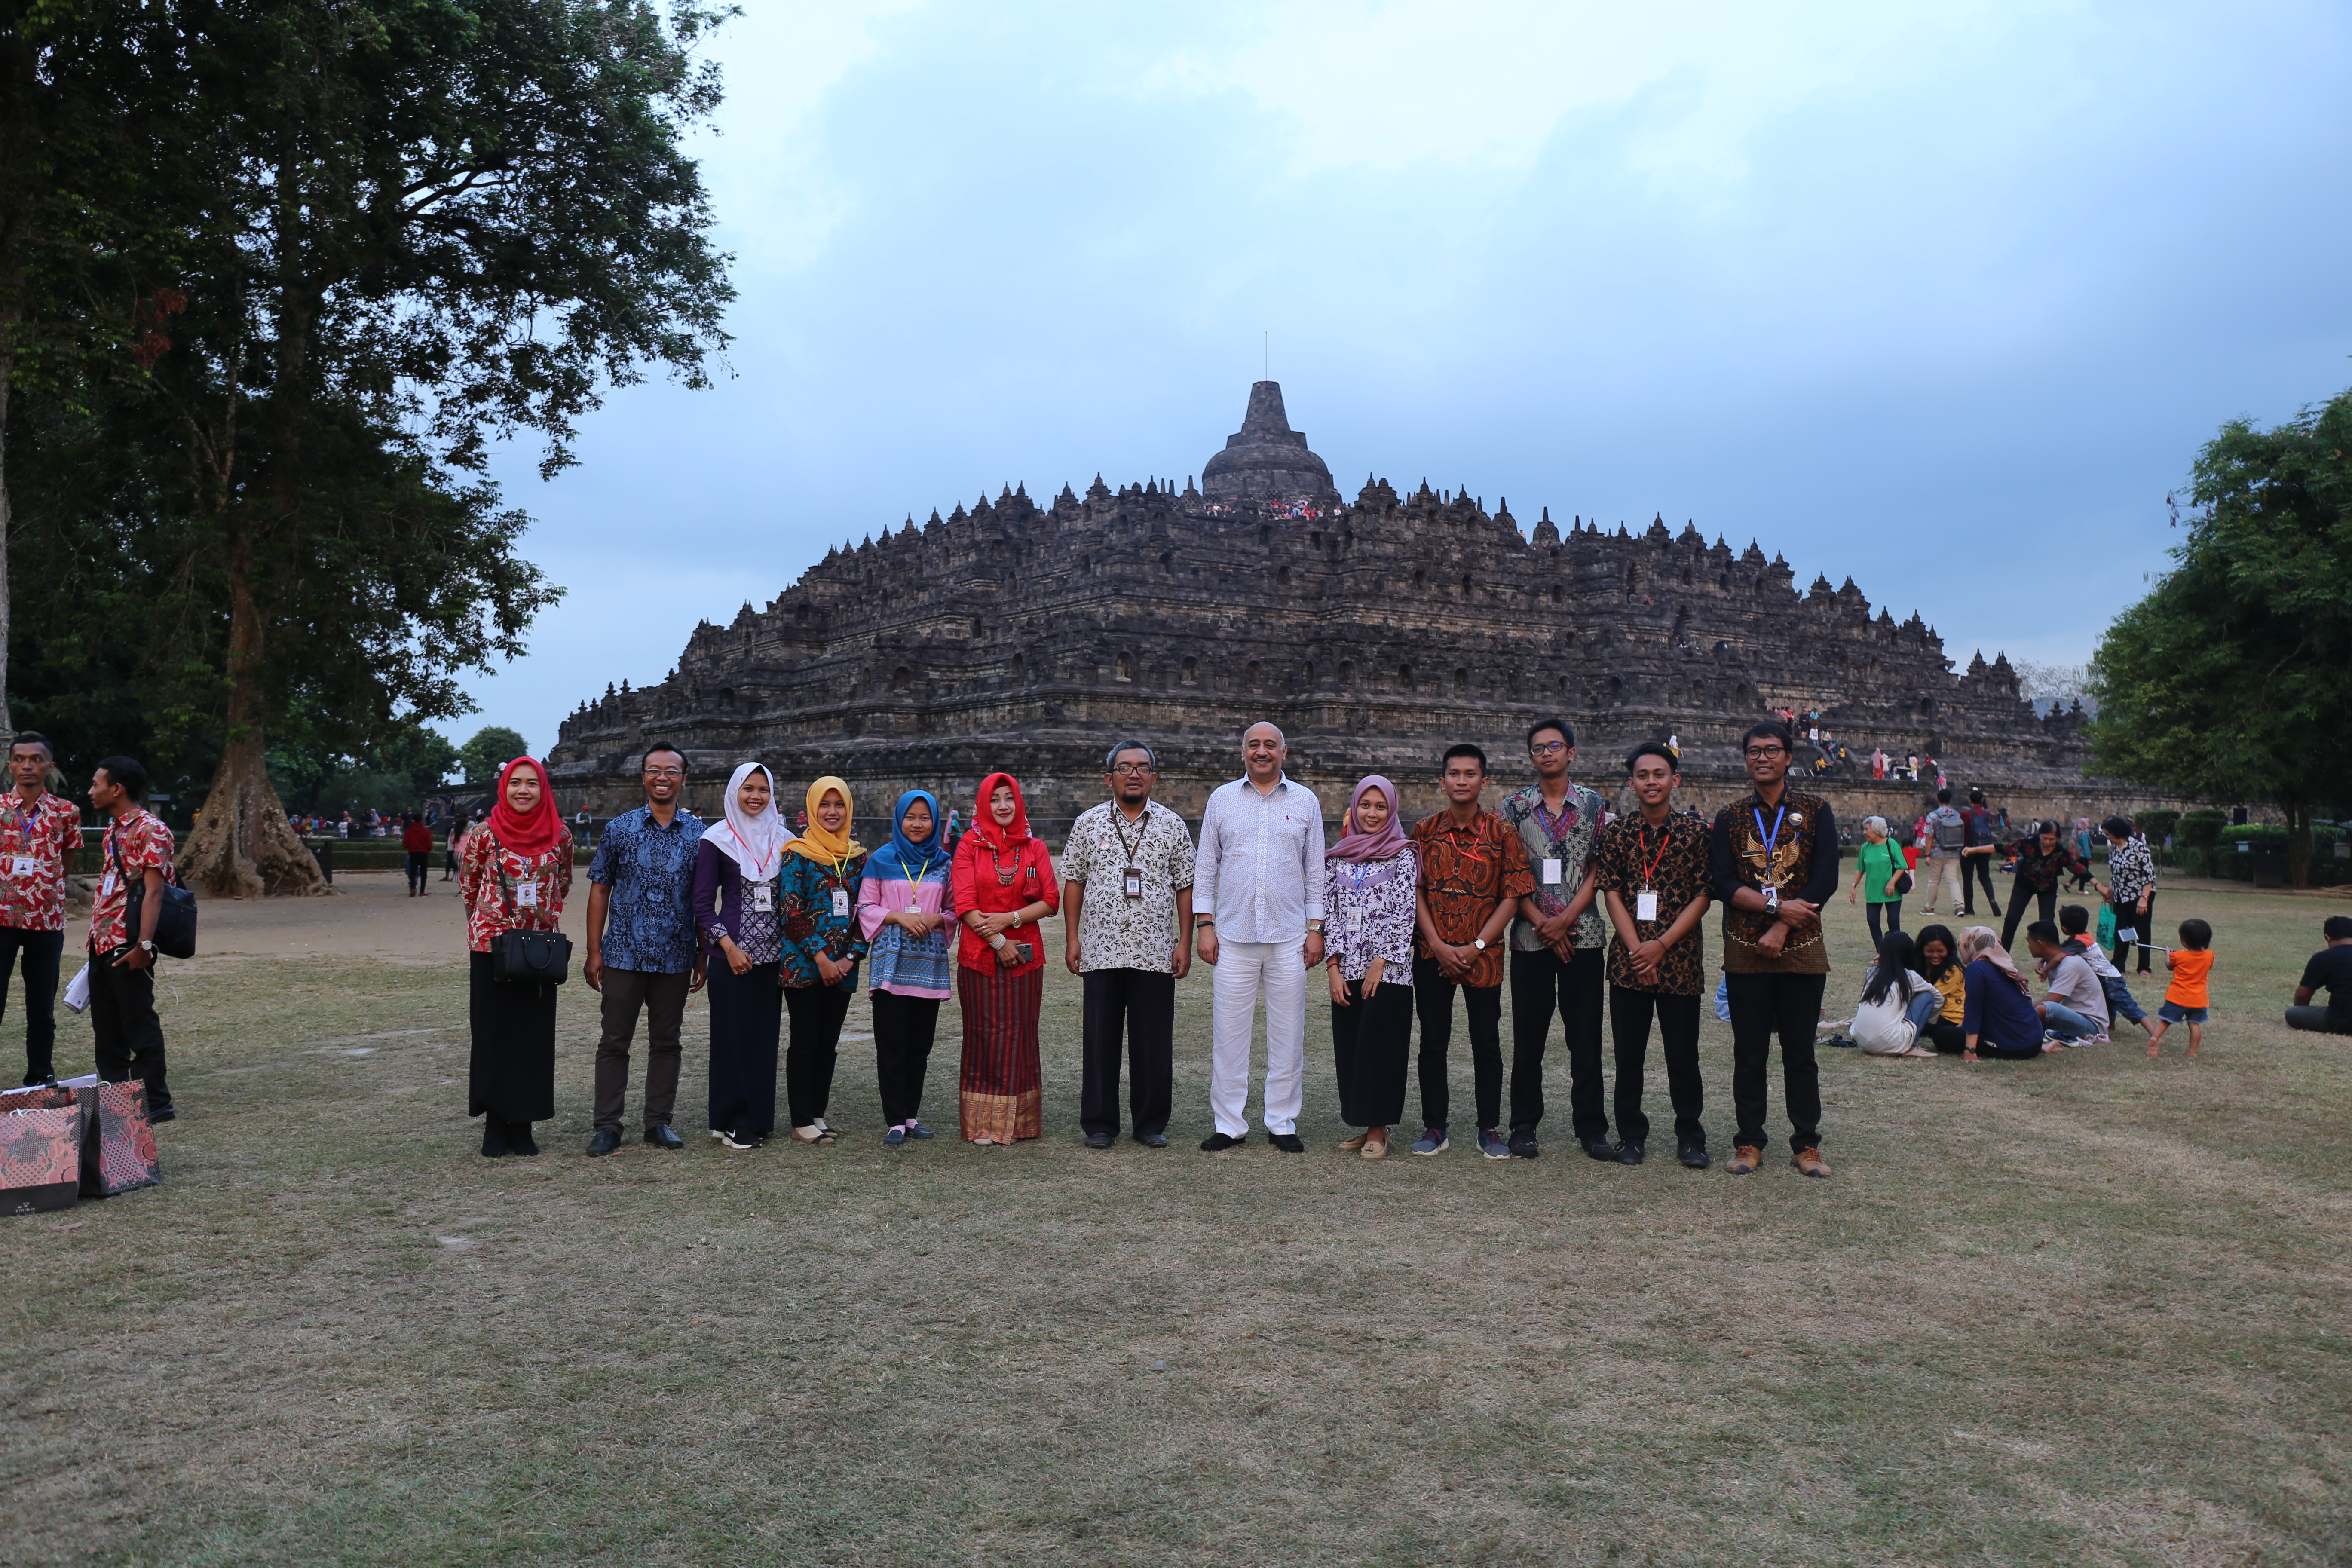 You are currently viewing Kunjungan Kepala Perwakilan Organisasi Internasional ke Candi Borobudur